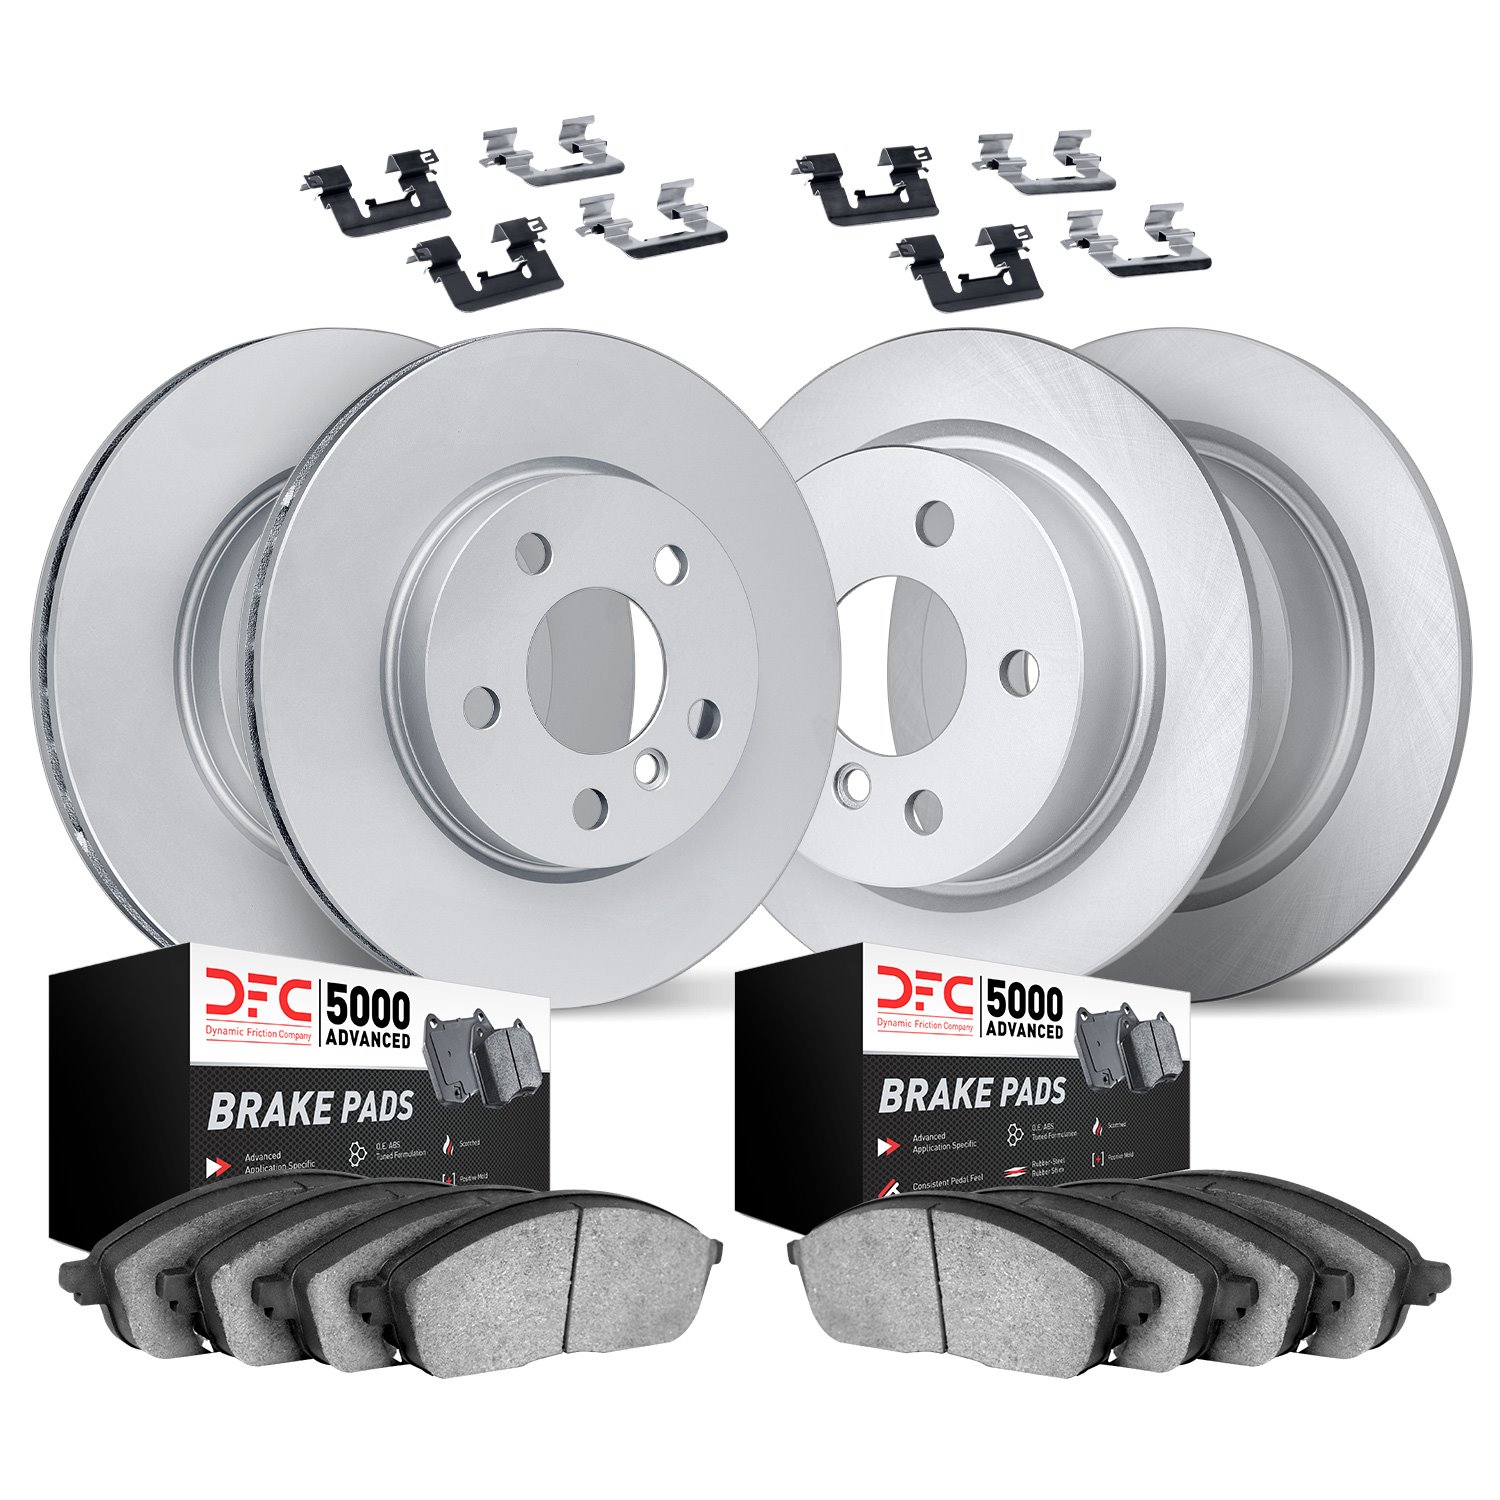 9514-63215 GEOMET Brake Rotors w/5000 Advanced Brake Pads Kit & Hardware, 2014-2019 Mercedes-Benz, Position: Front and Rear